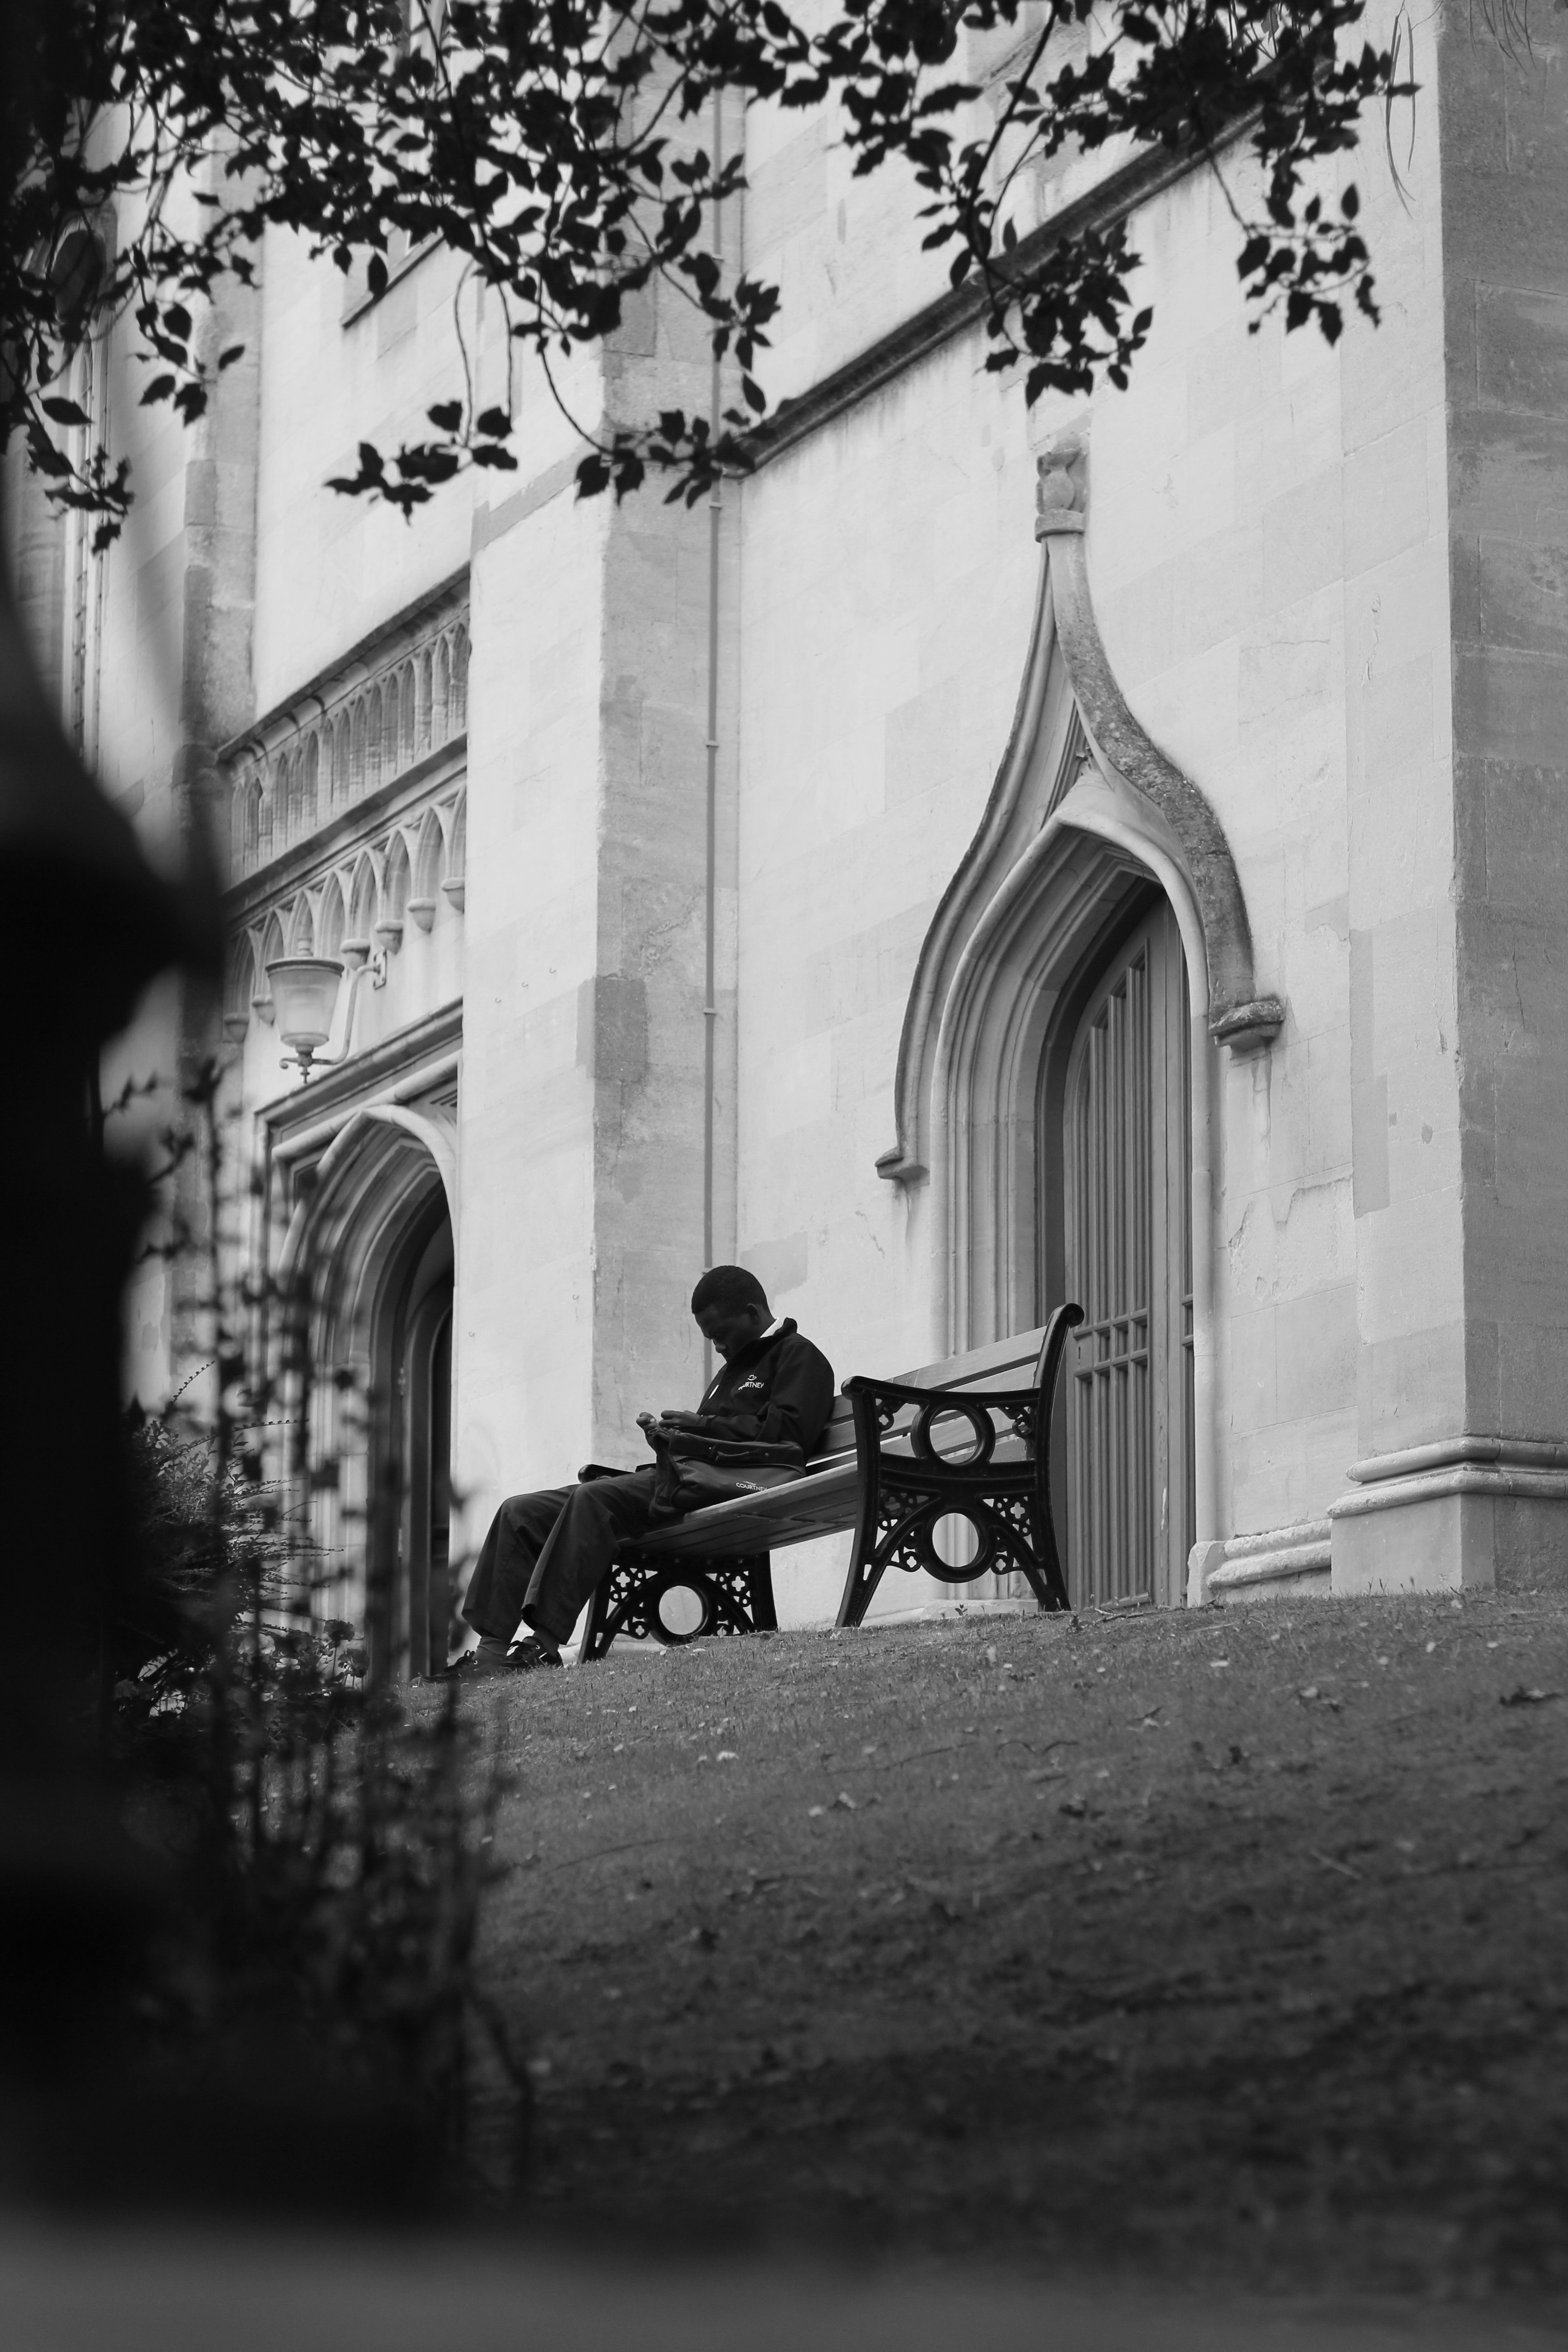 Man sitting on bench by church